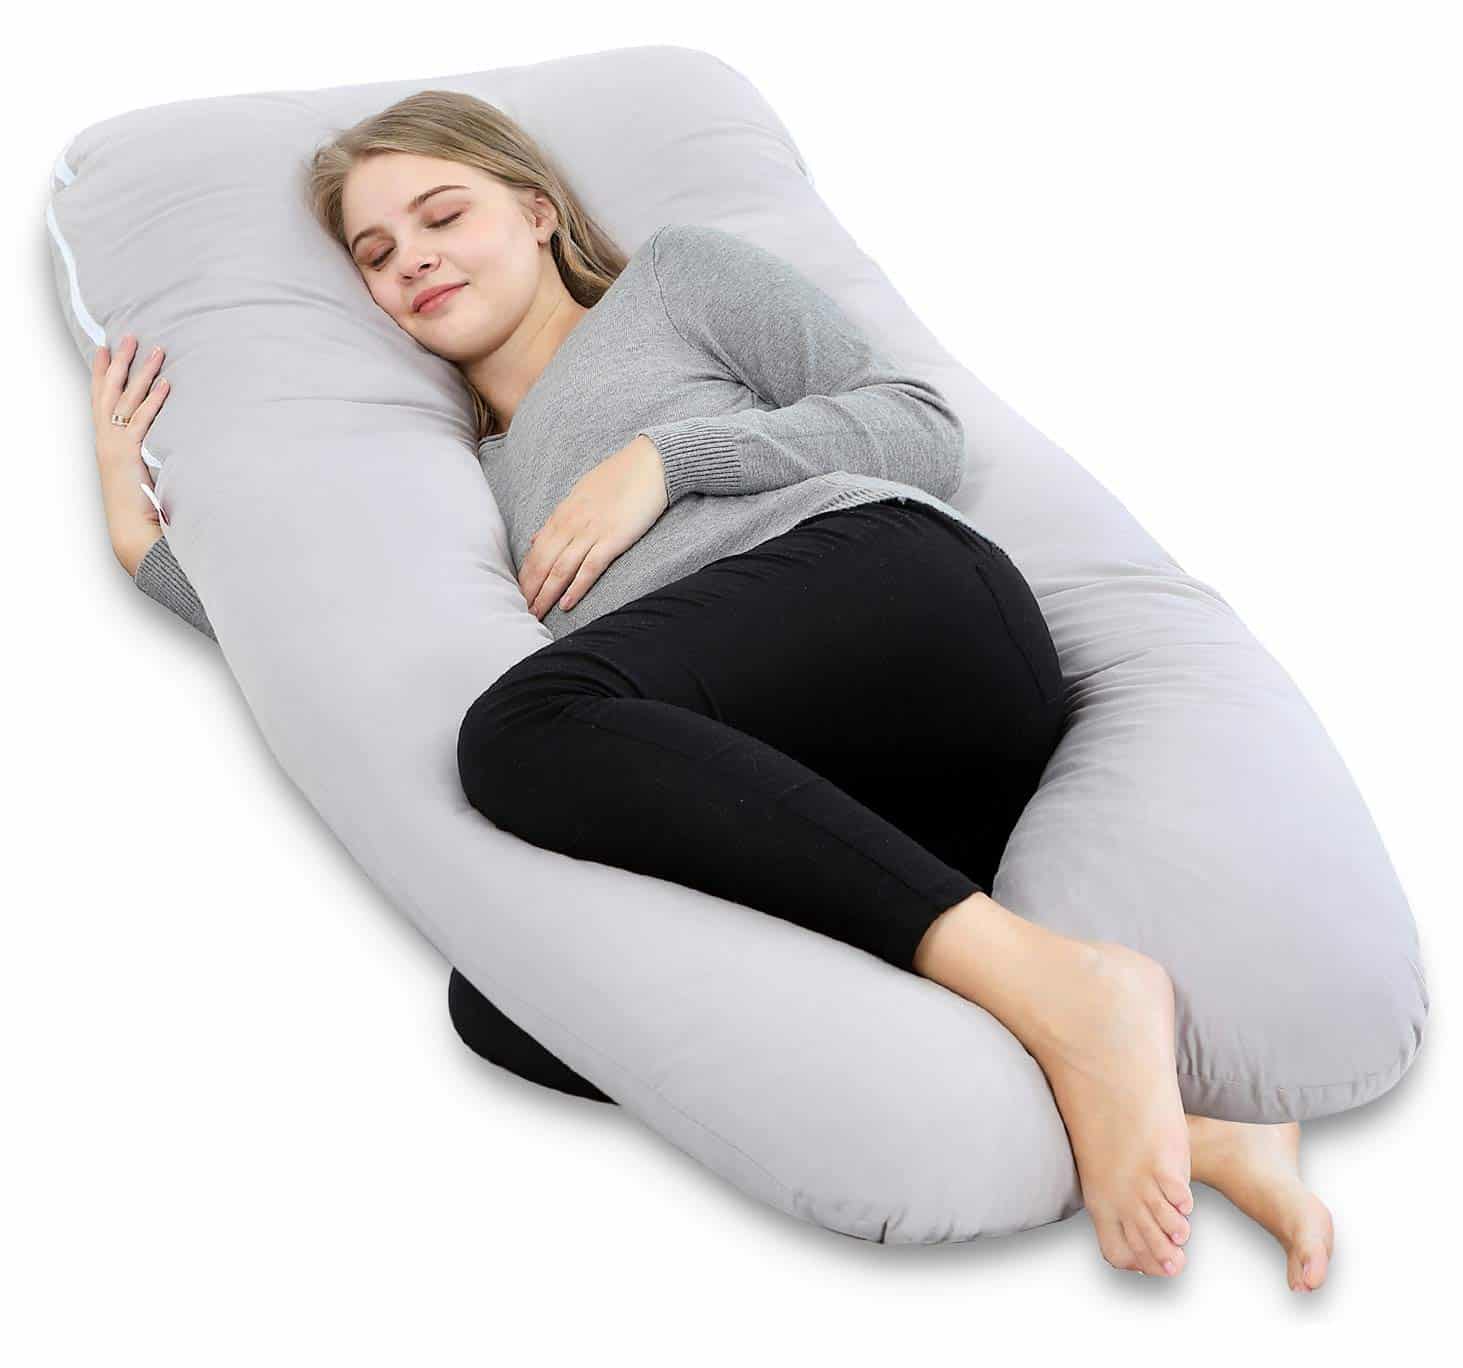 Amazon.com: AngQi Pregnancy Pillow with Cotton Cover, U